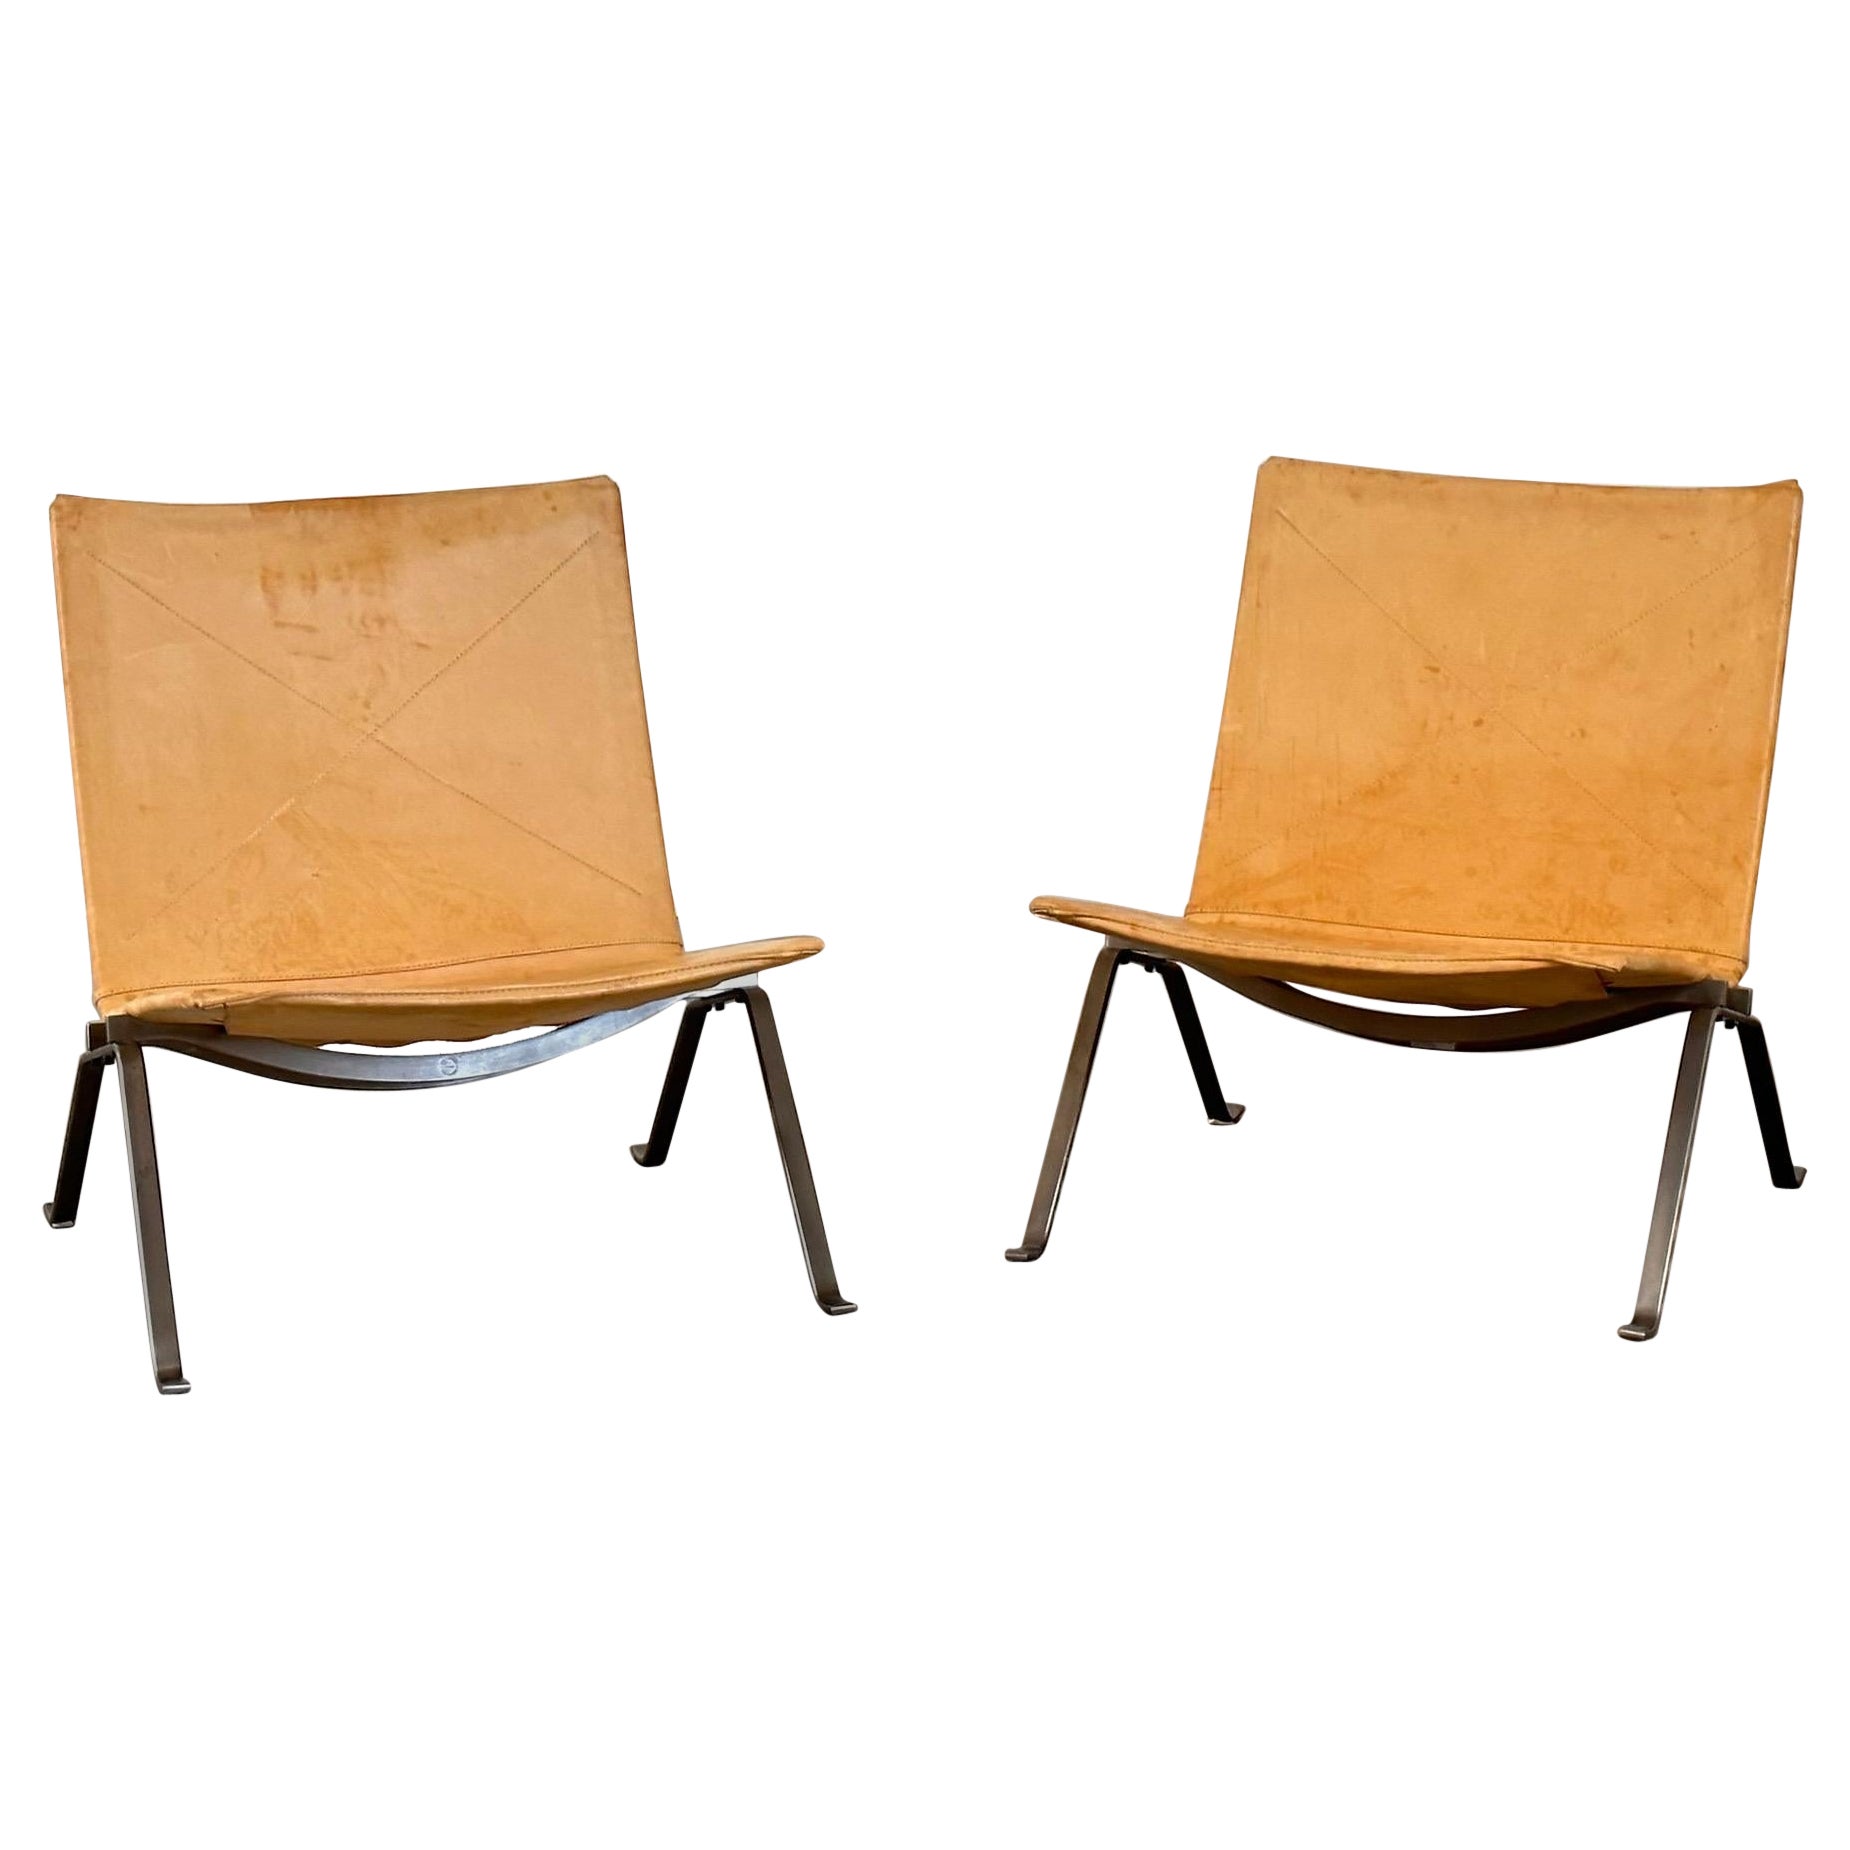 Poul Kjaerholm "PK22" Lounge Chairs for Fritz Hansen in Cognac Leather, 1956